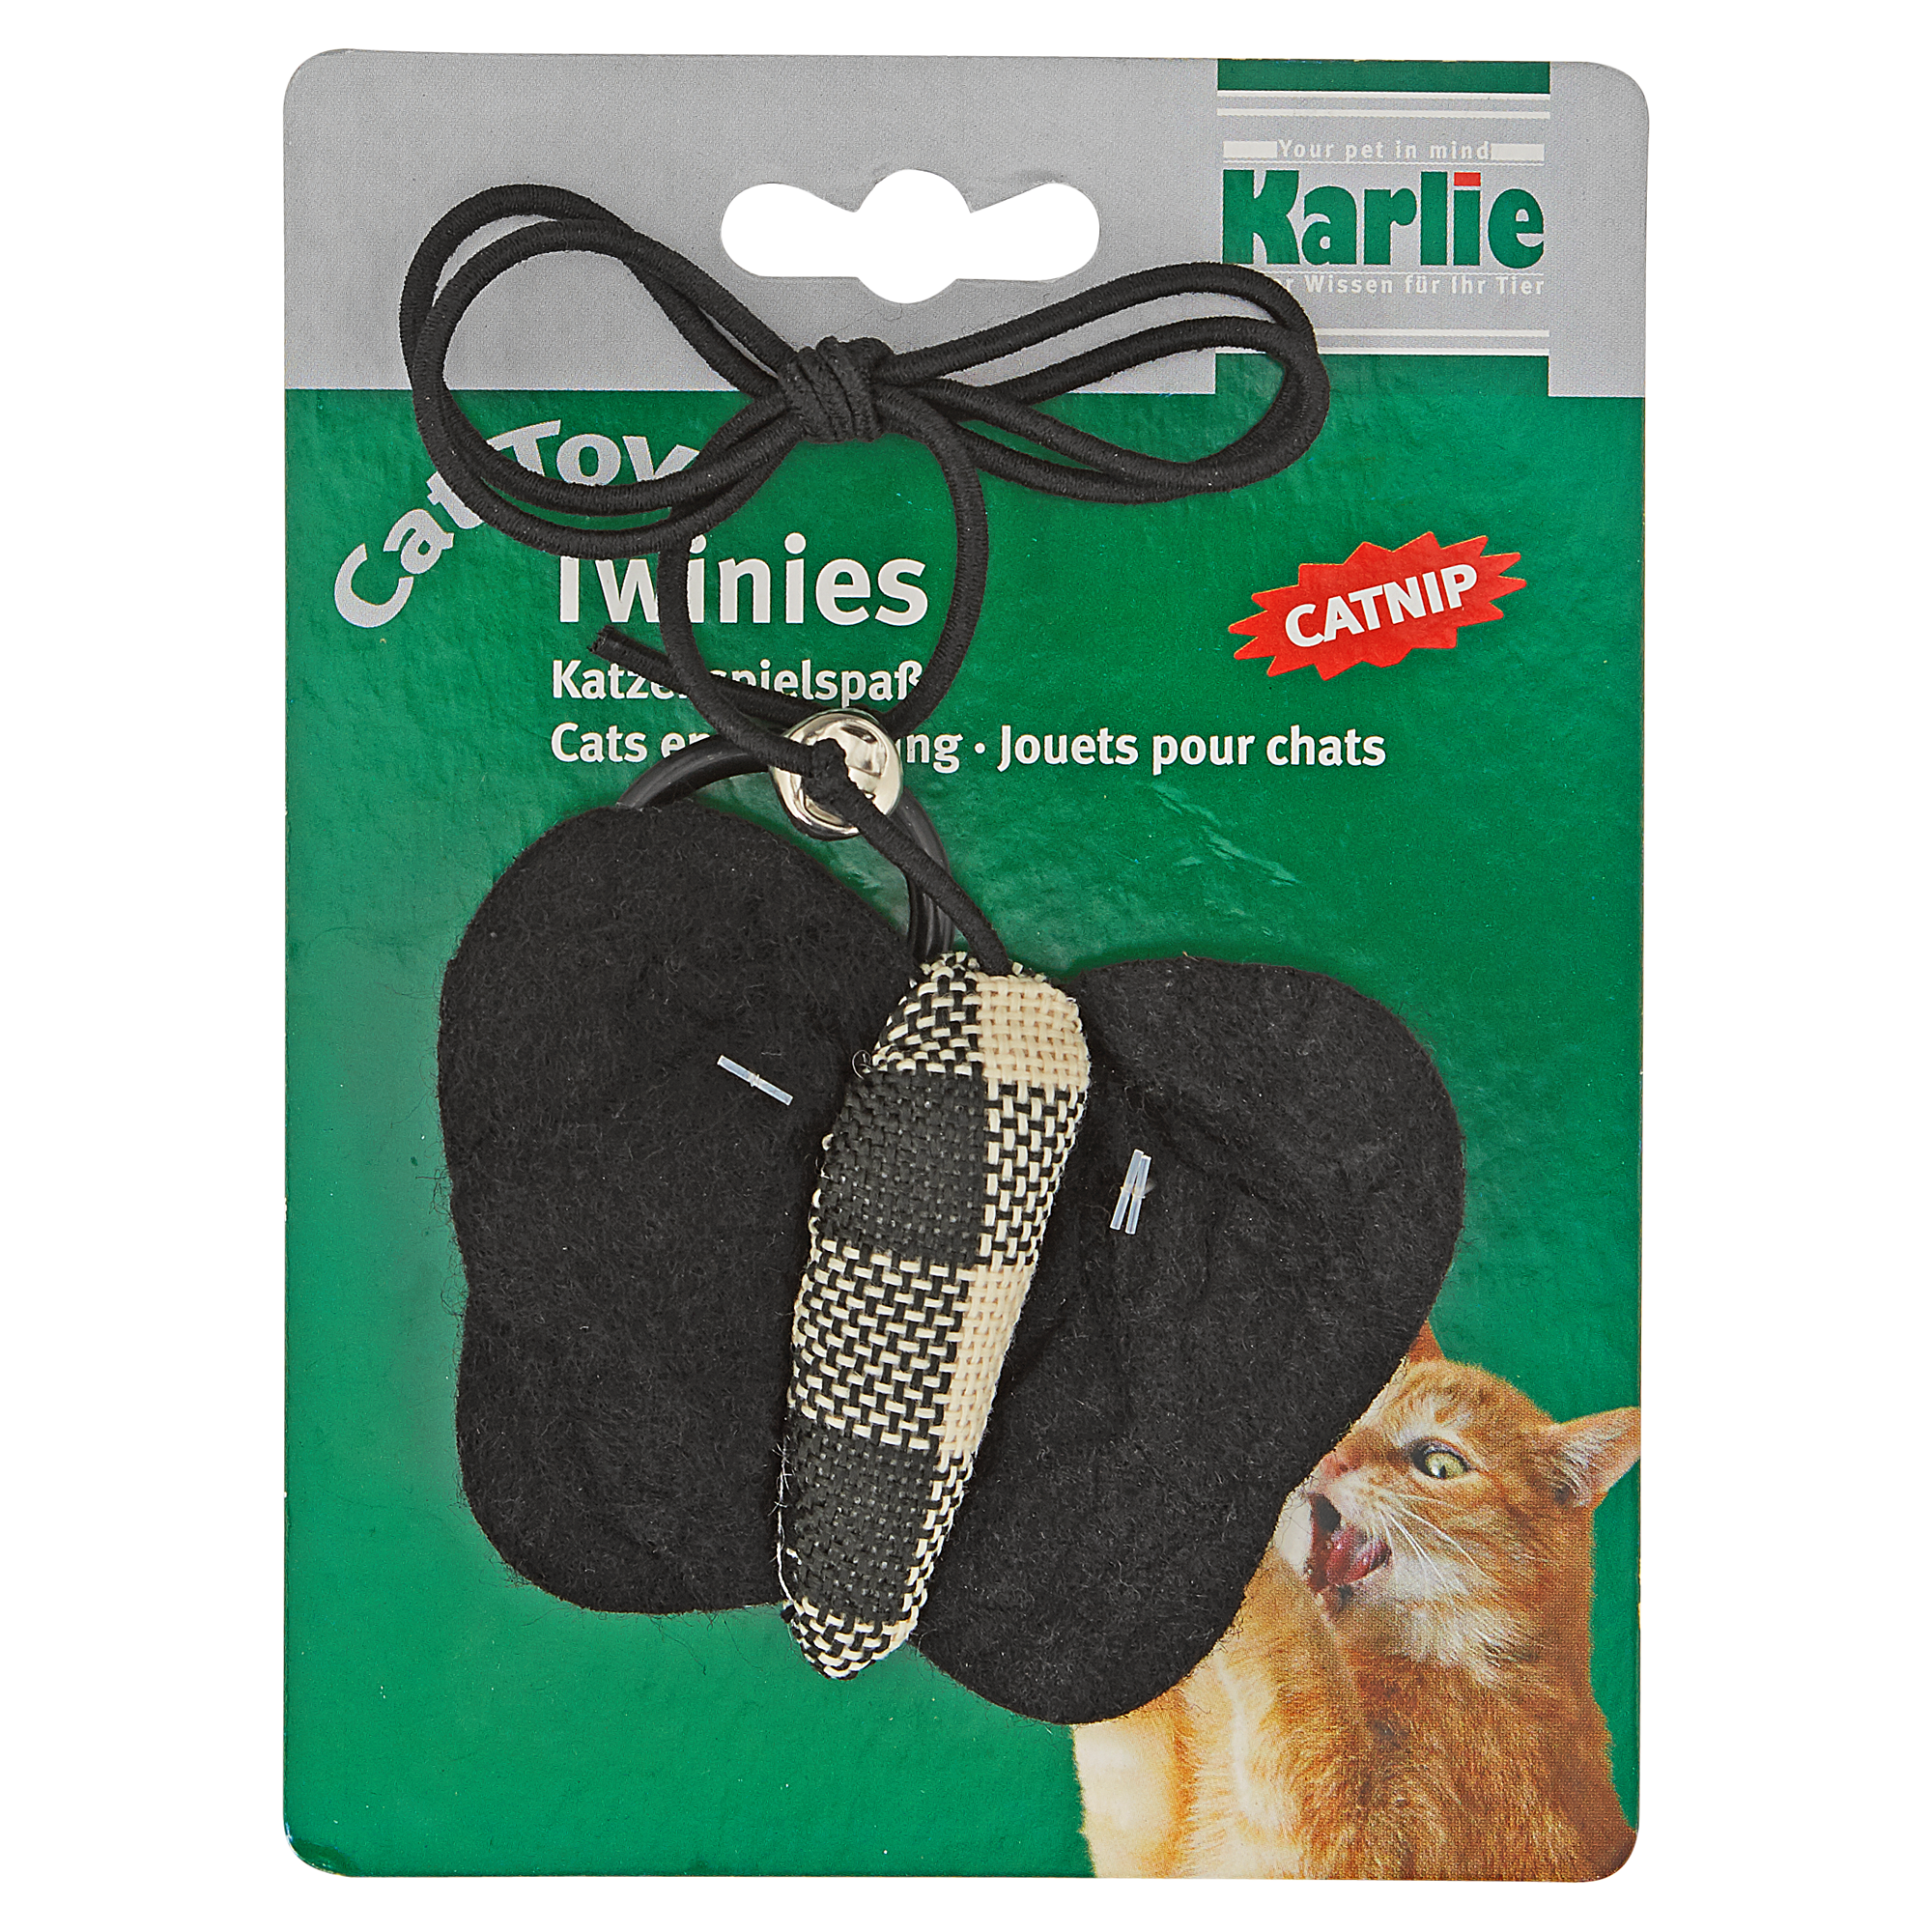 Katzenspielzeug "Twinies" Textil schwarz/weiß + product picture